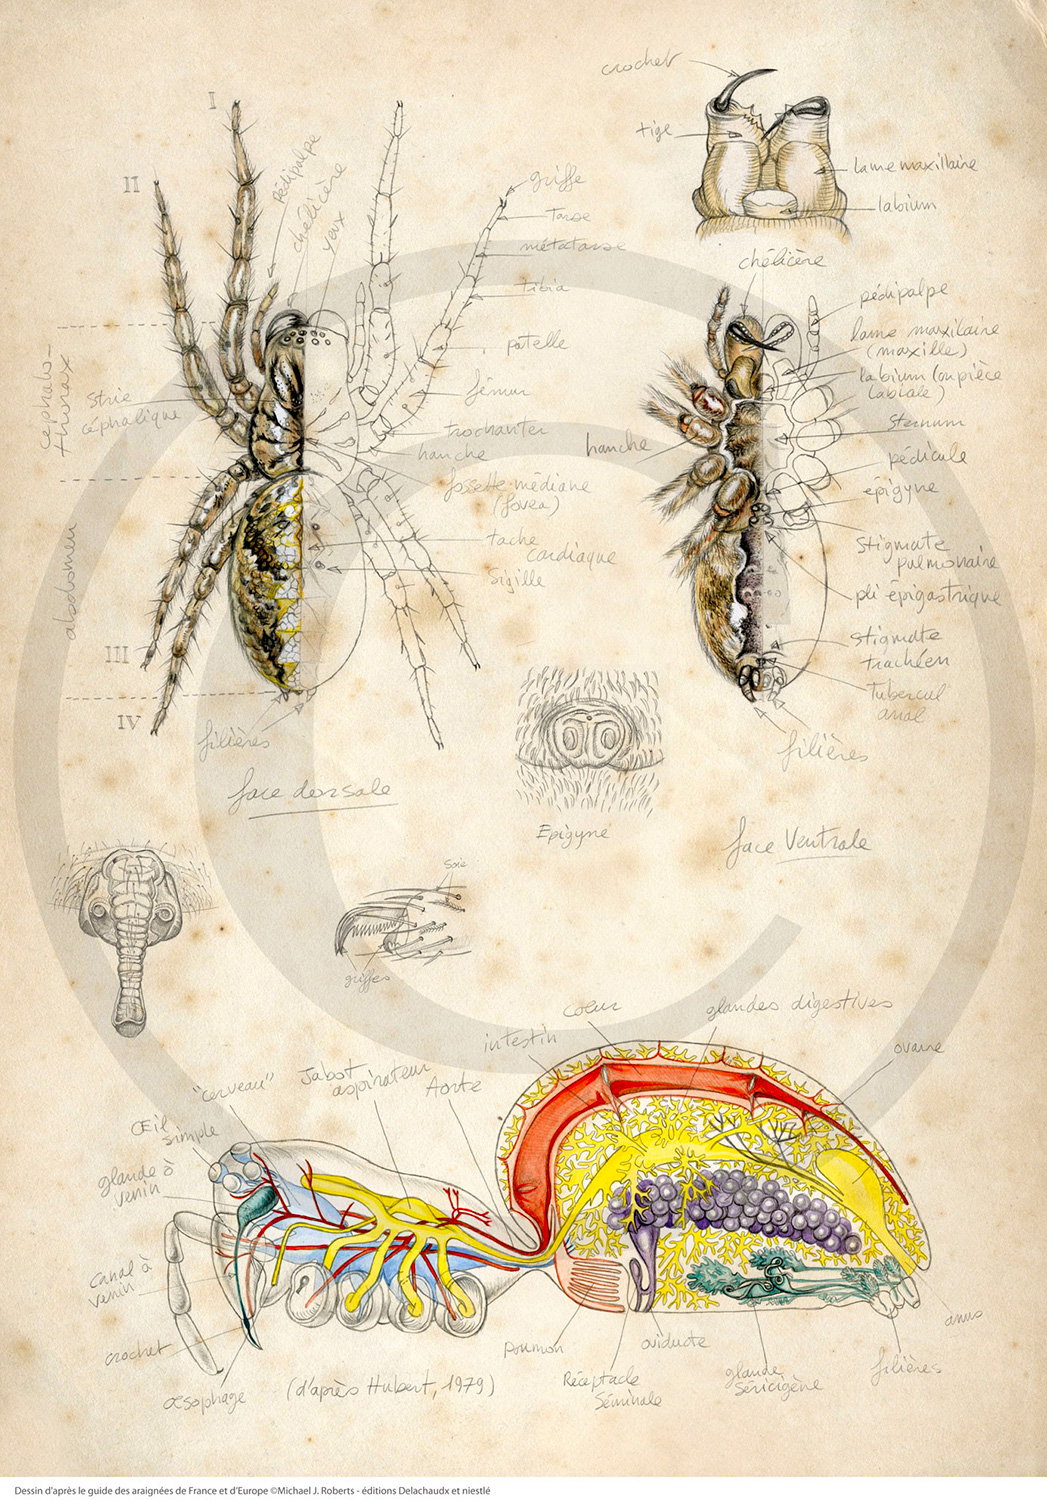 Marcello-art: Entomology 83 - Spider anatomy